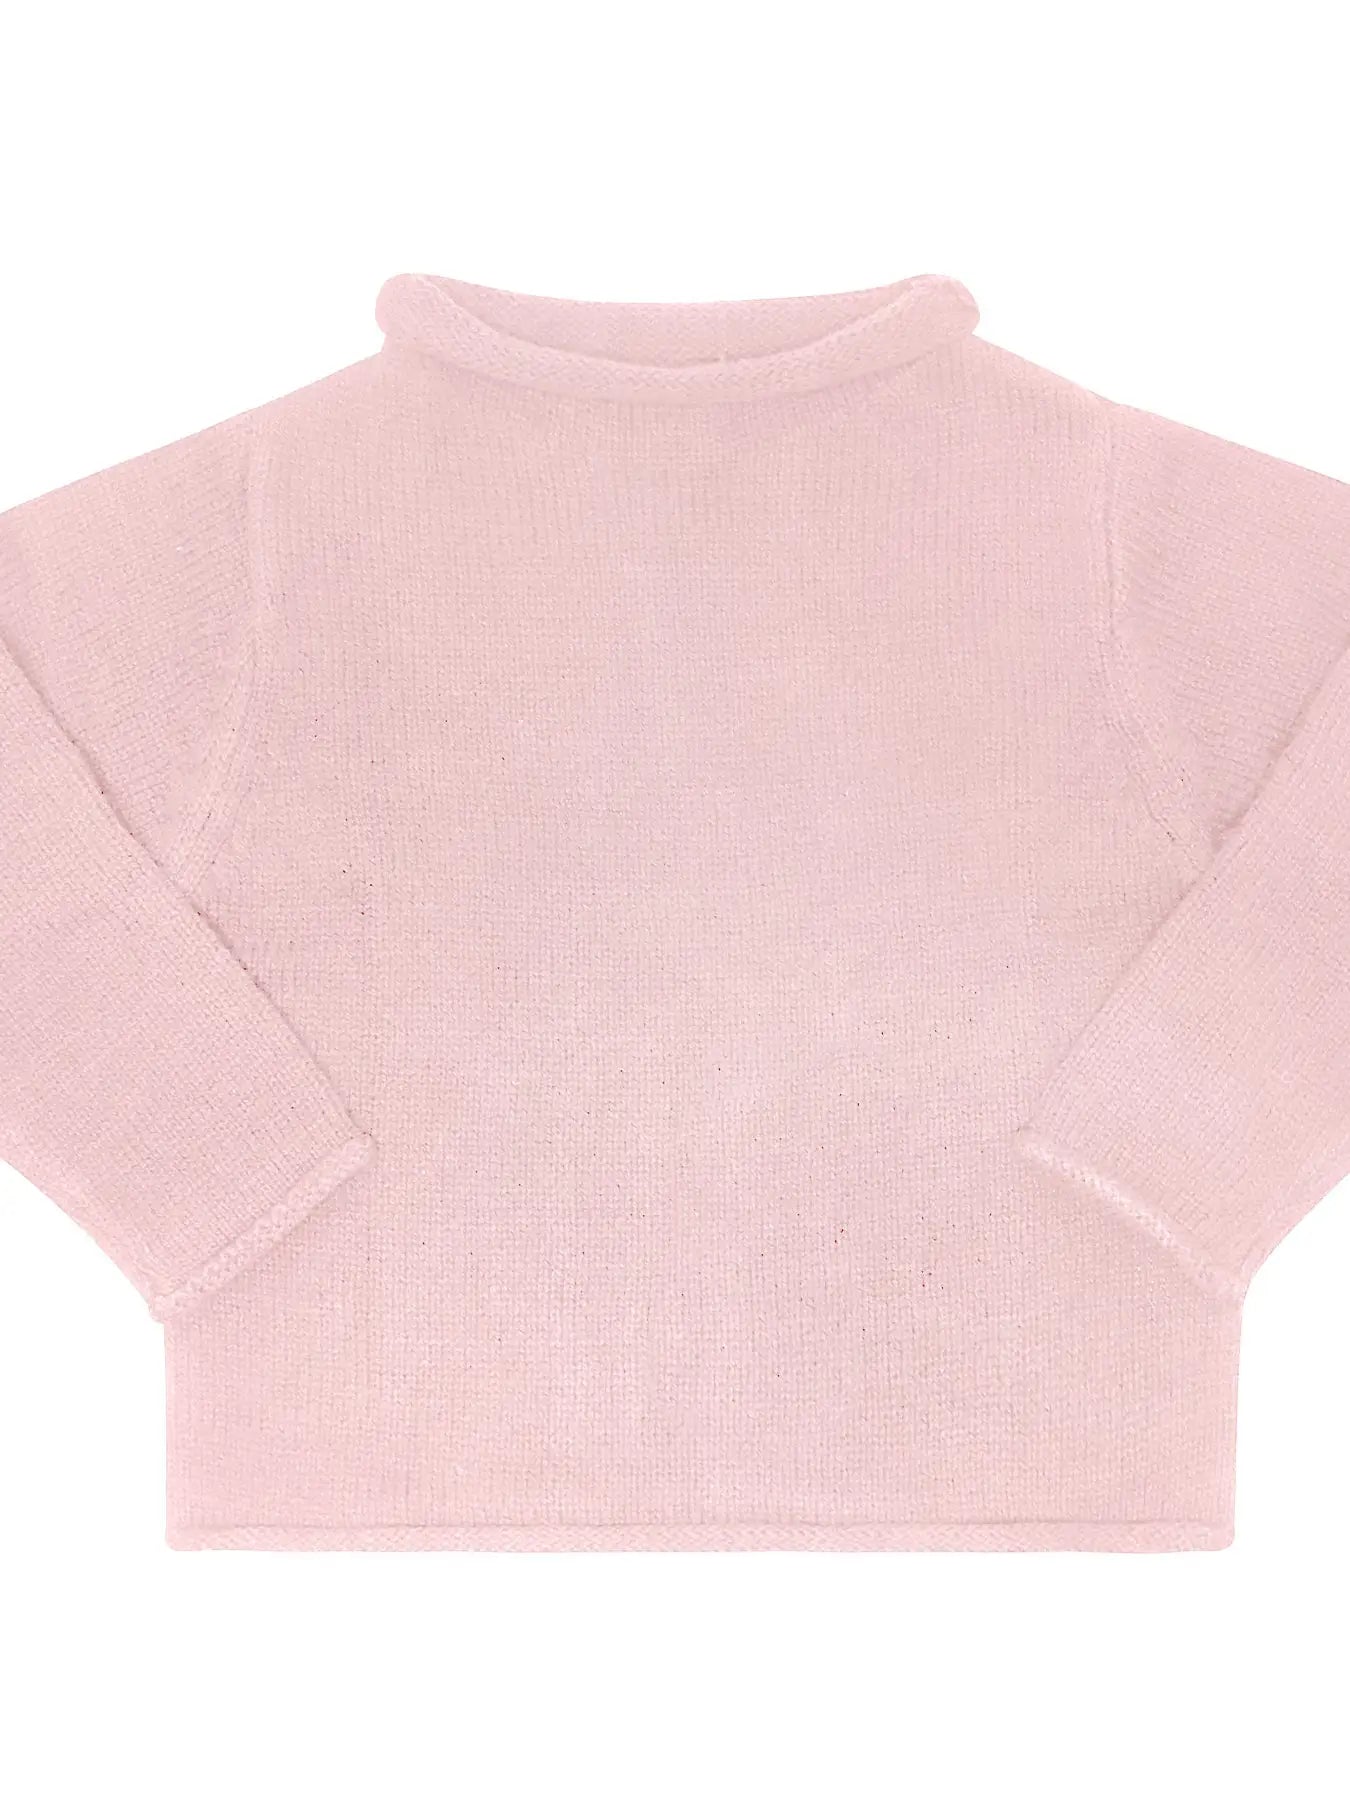 Ballet Pink Roll Neck Sweater